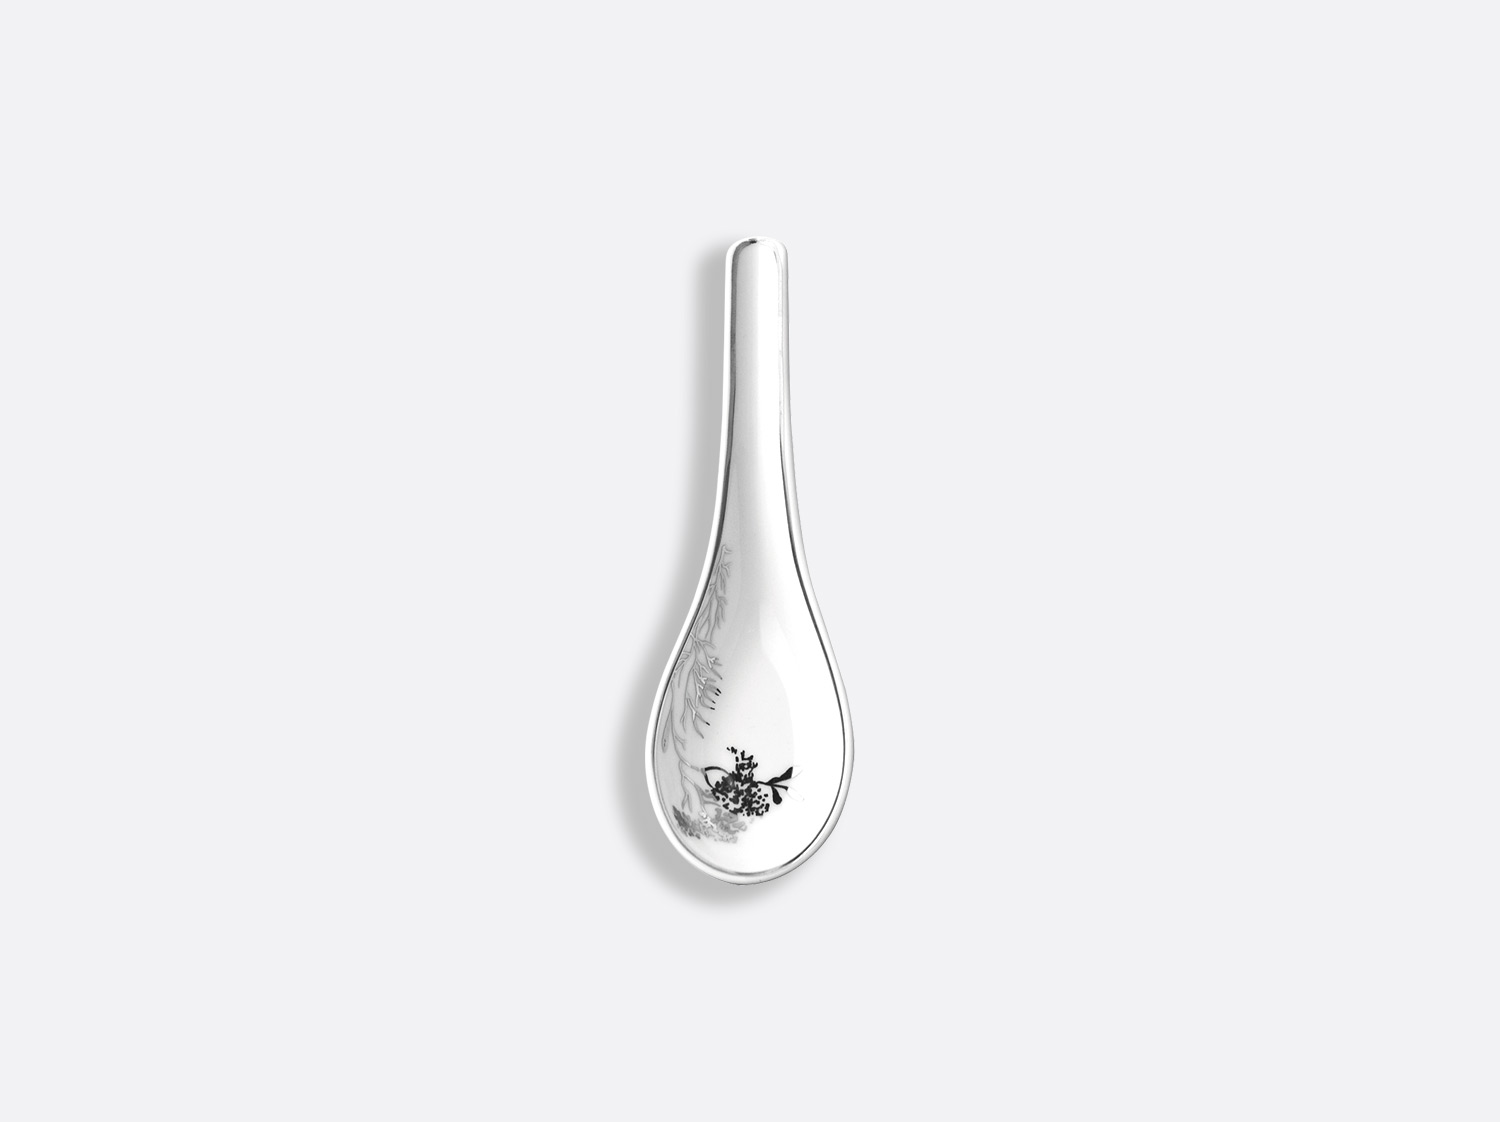 China Chinese spoon of the collection Promenade | Bernardaud